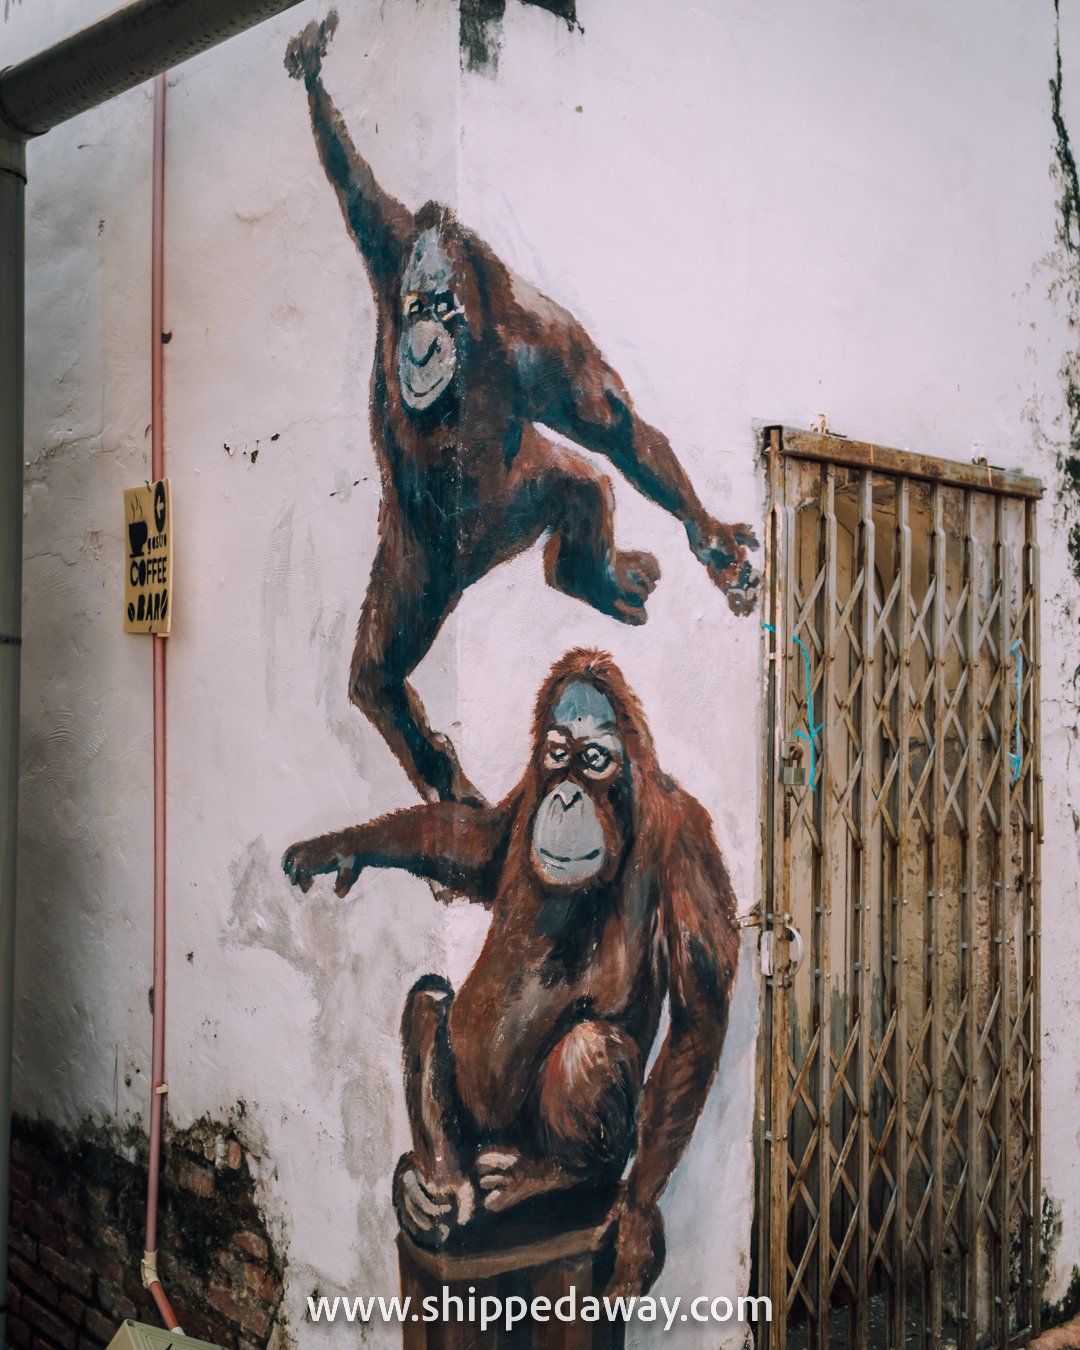 Orangutan graffiti street art in Melaka, Malaysia